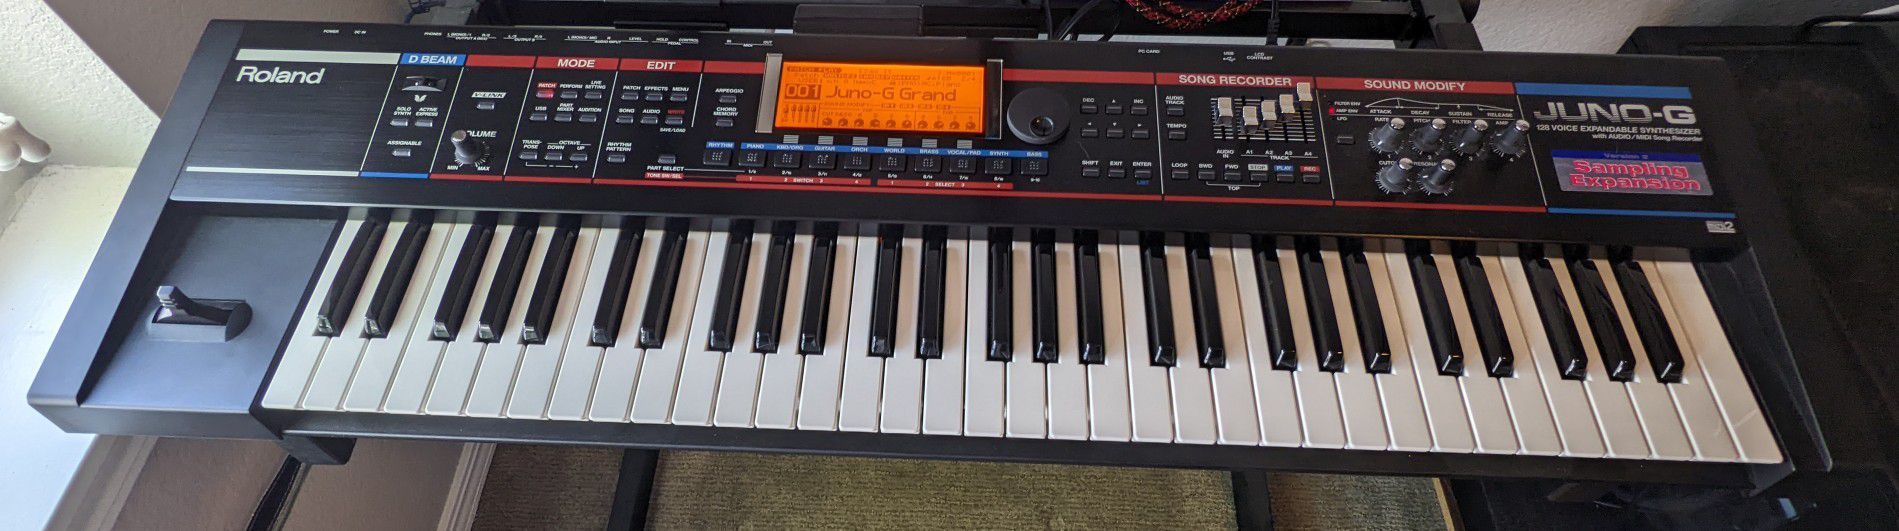 Roland Juno-G keyboard synthesizer